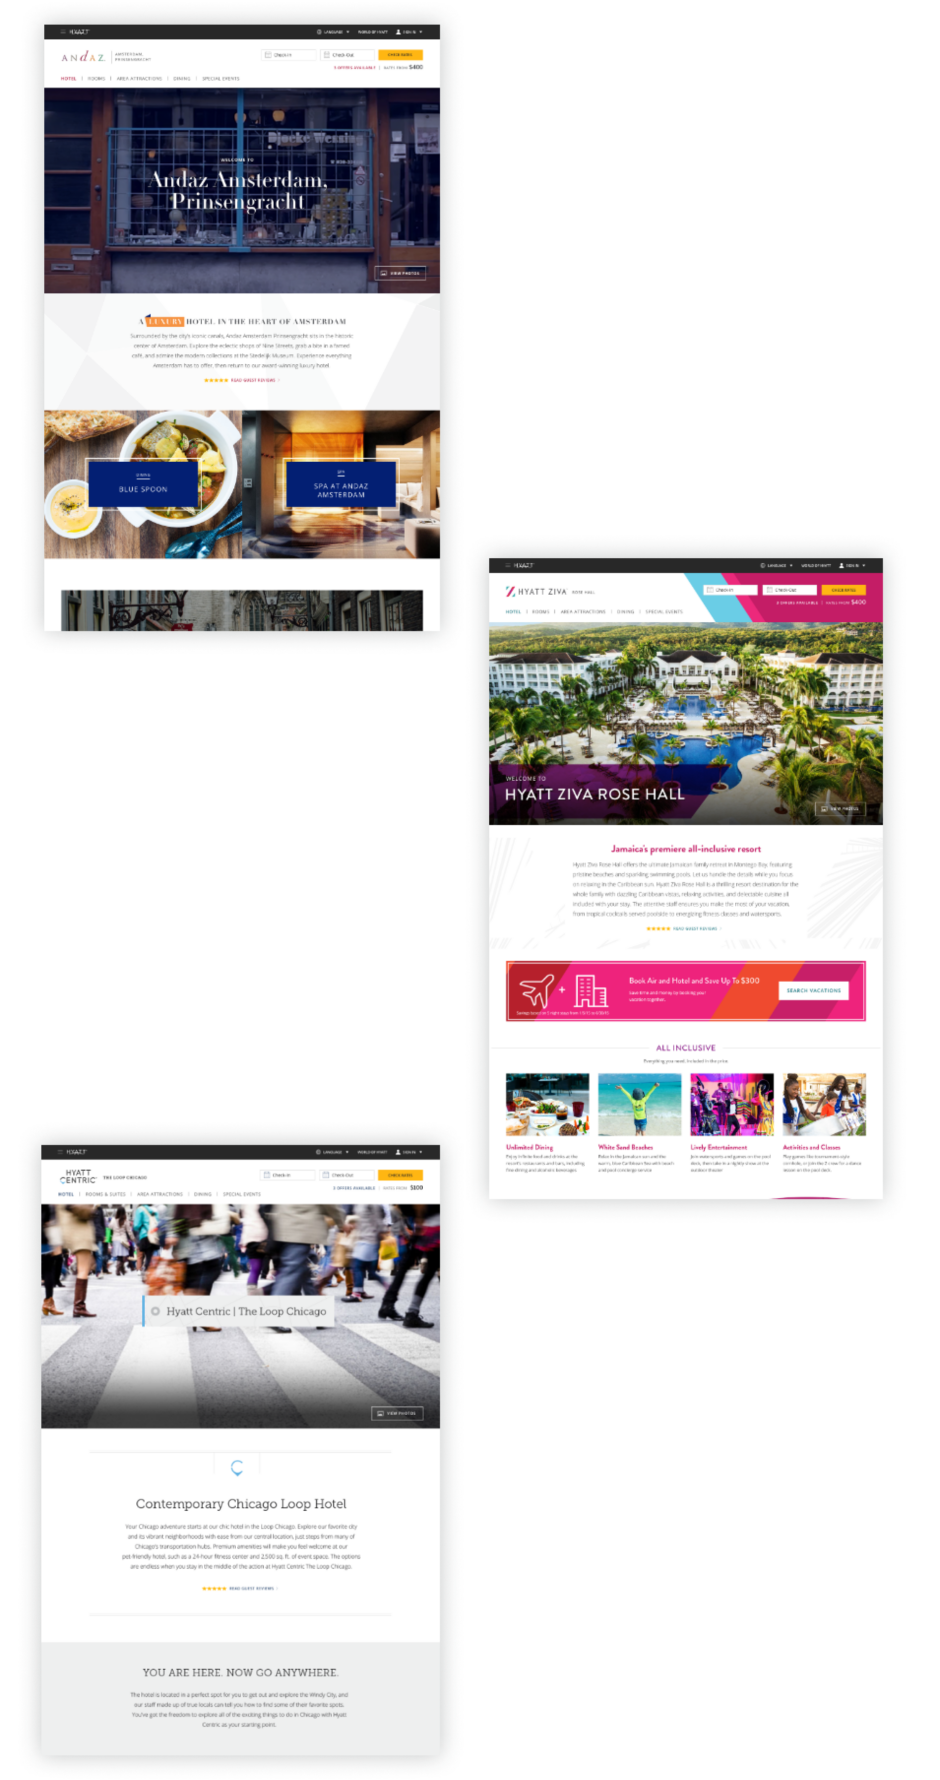 Mockups of three different Hyatt brand homepages